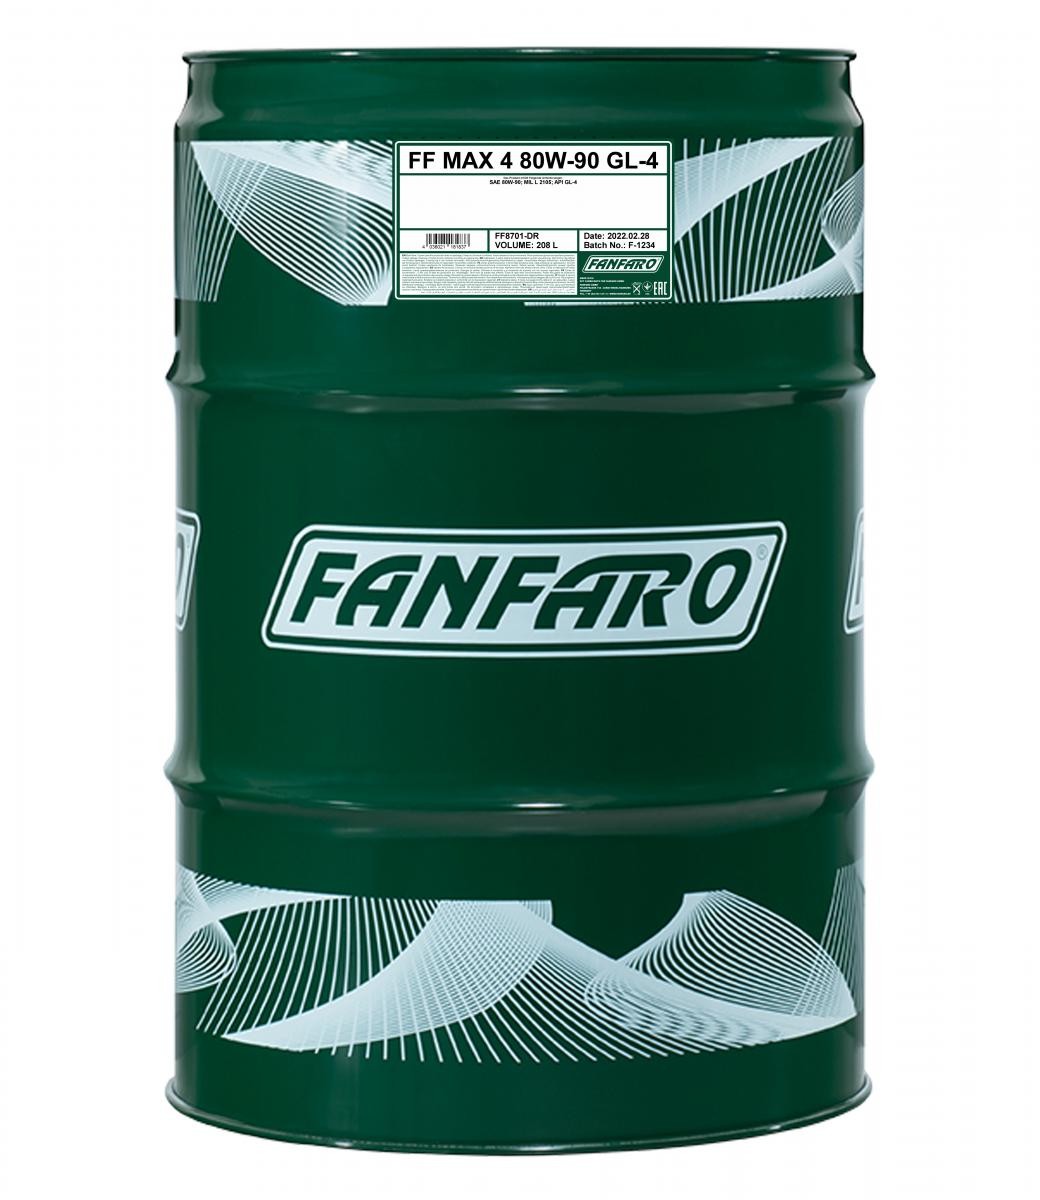 FANFARO MAX 4 80W-90, Inhalt: 208l MIL-L 2105 Getriebeöl FF8701-DR kaufen